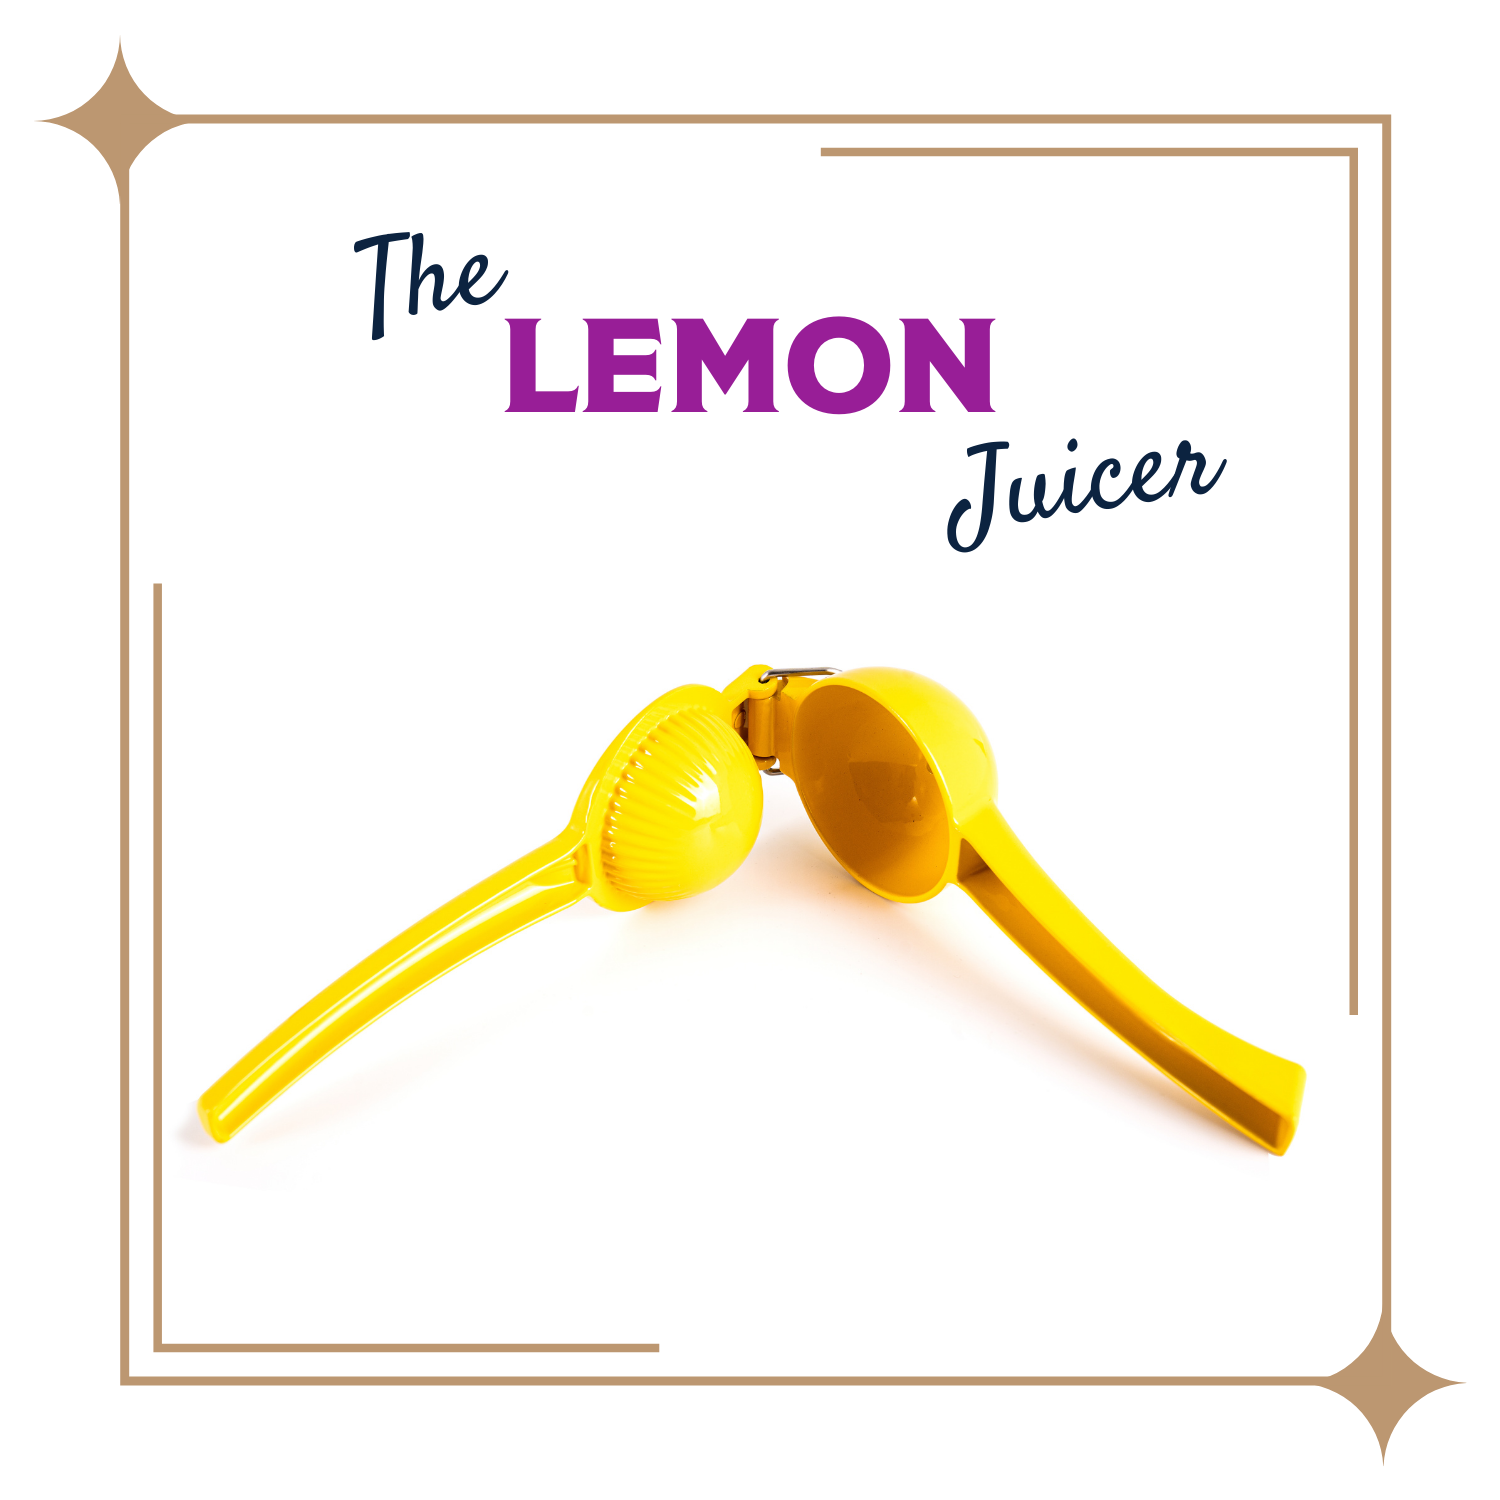 The Lemon Juicer